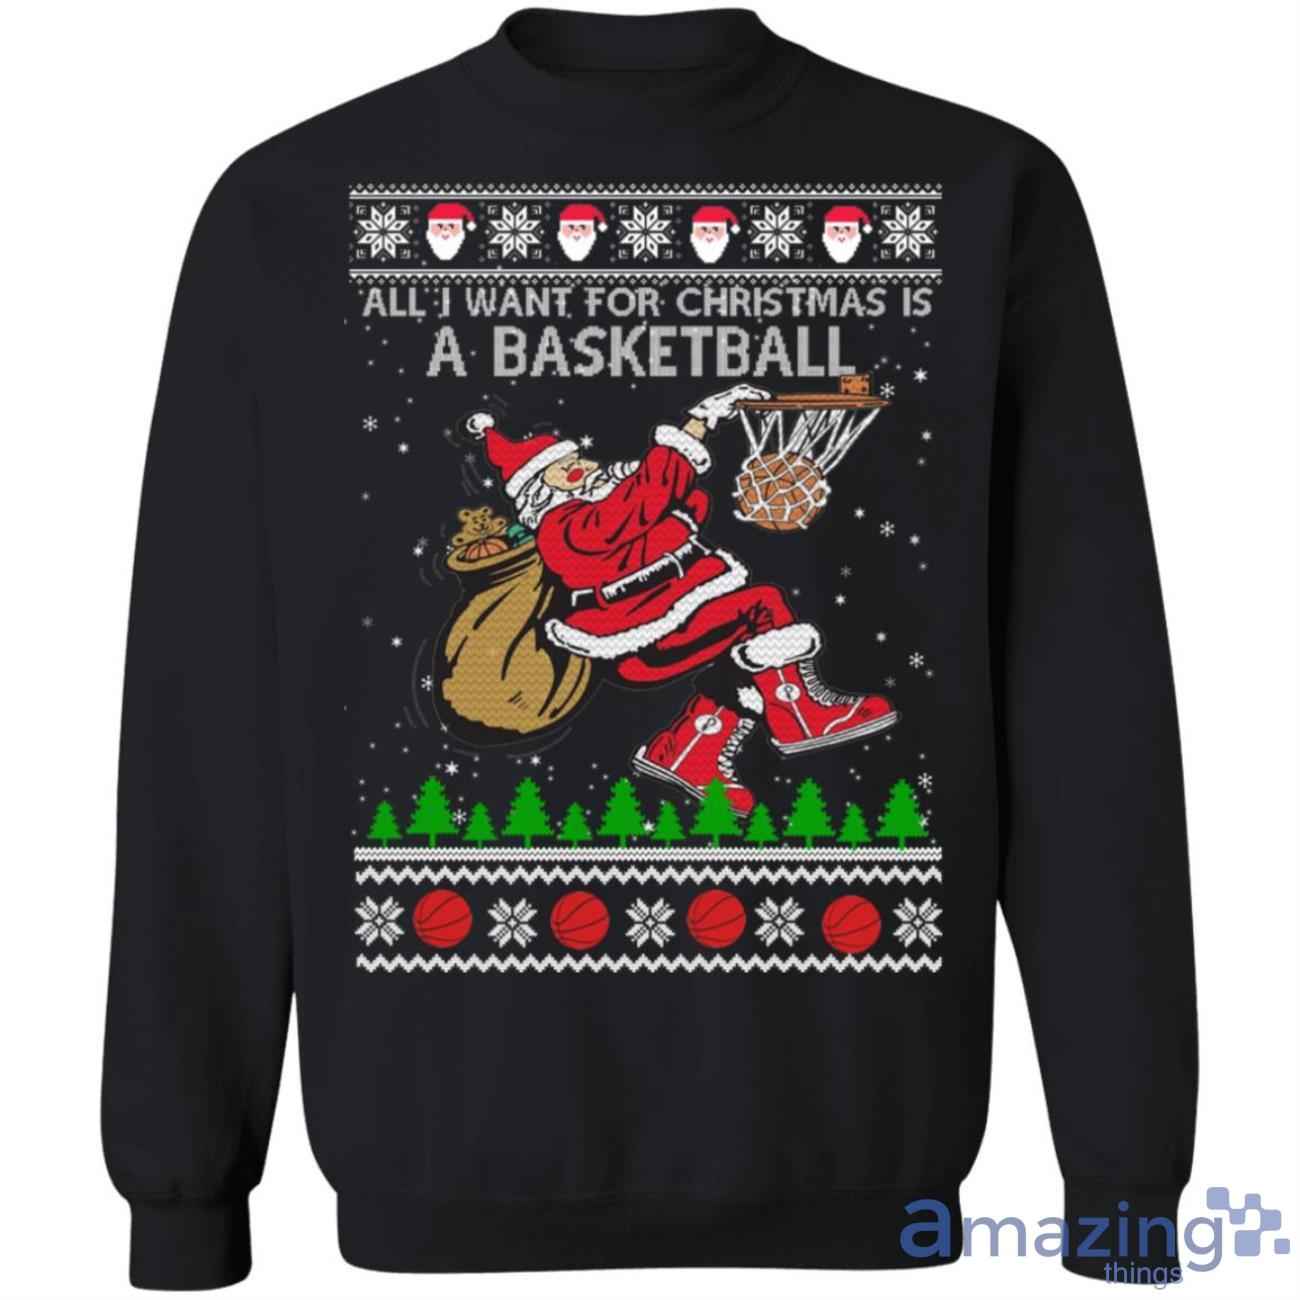 All I Want For Christmas Is A Basketball Christmas Sweatshirt Product Photo 1